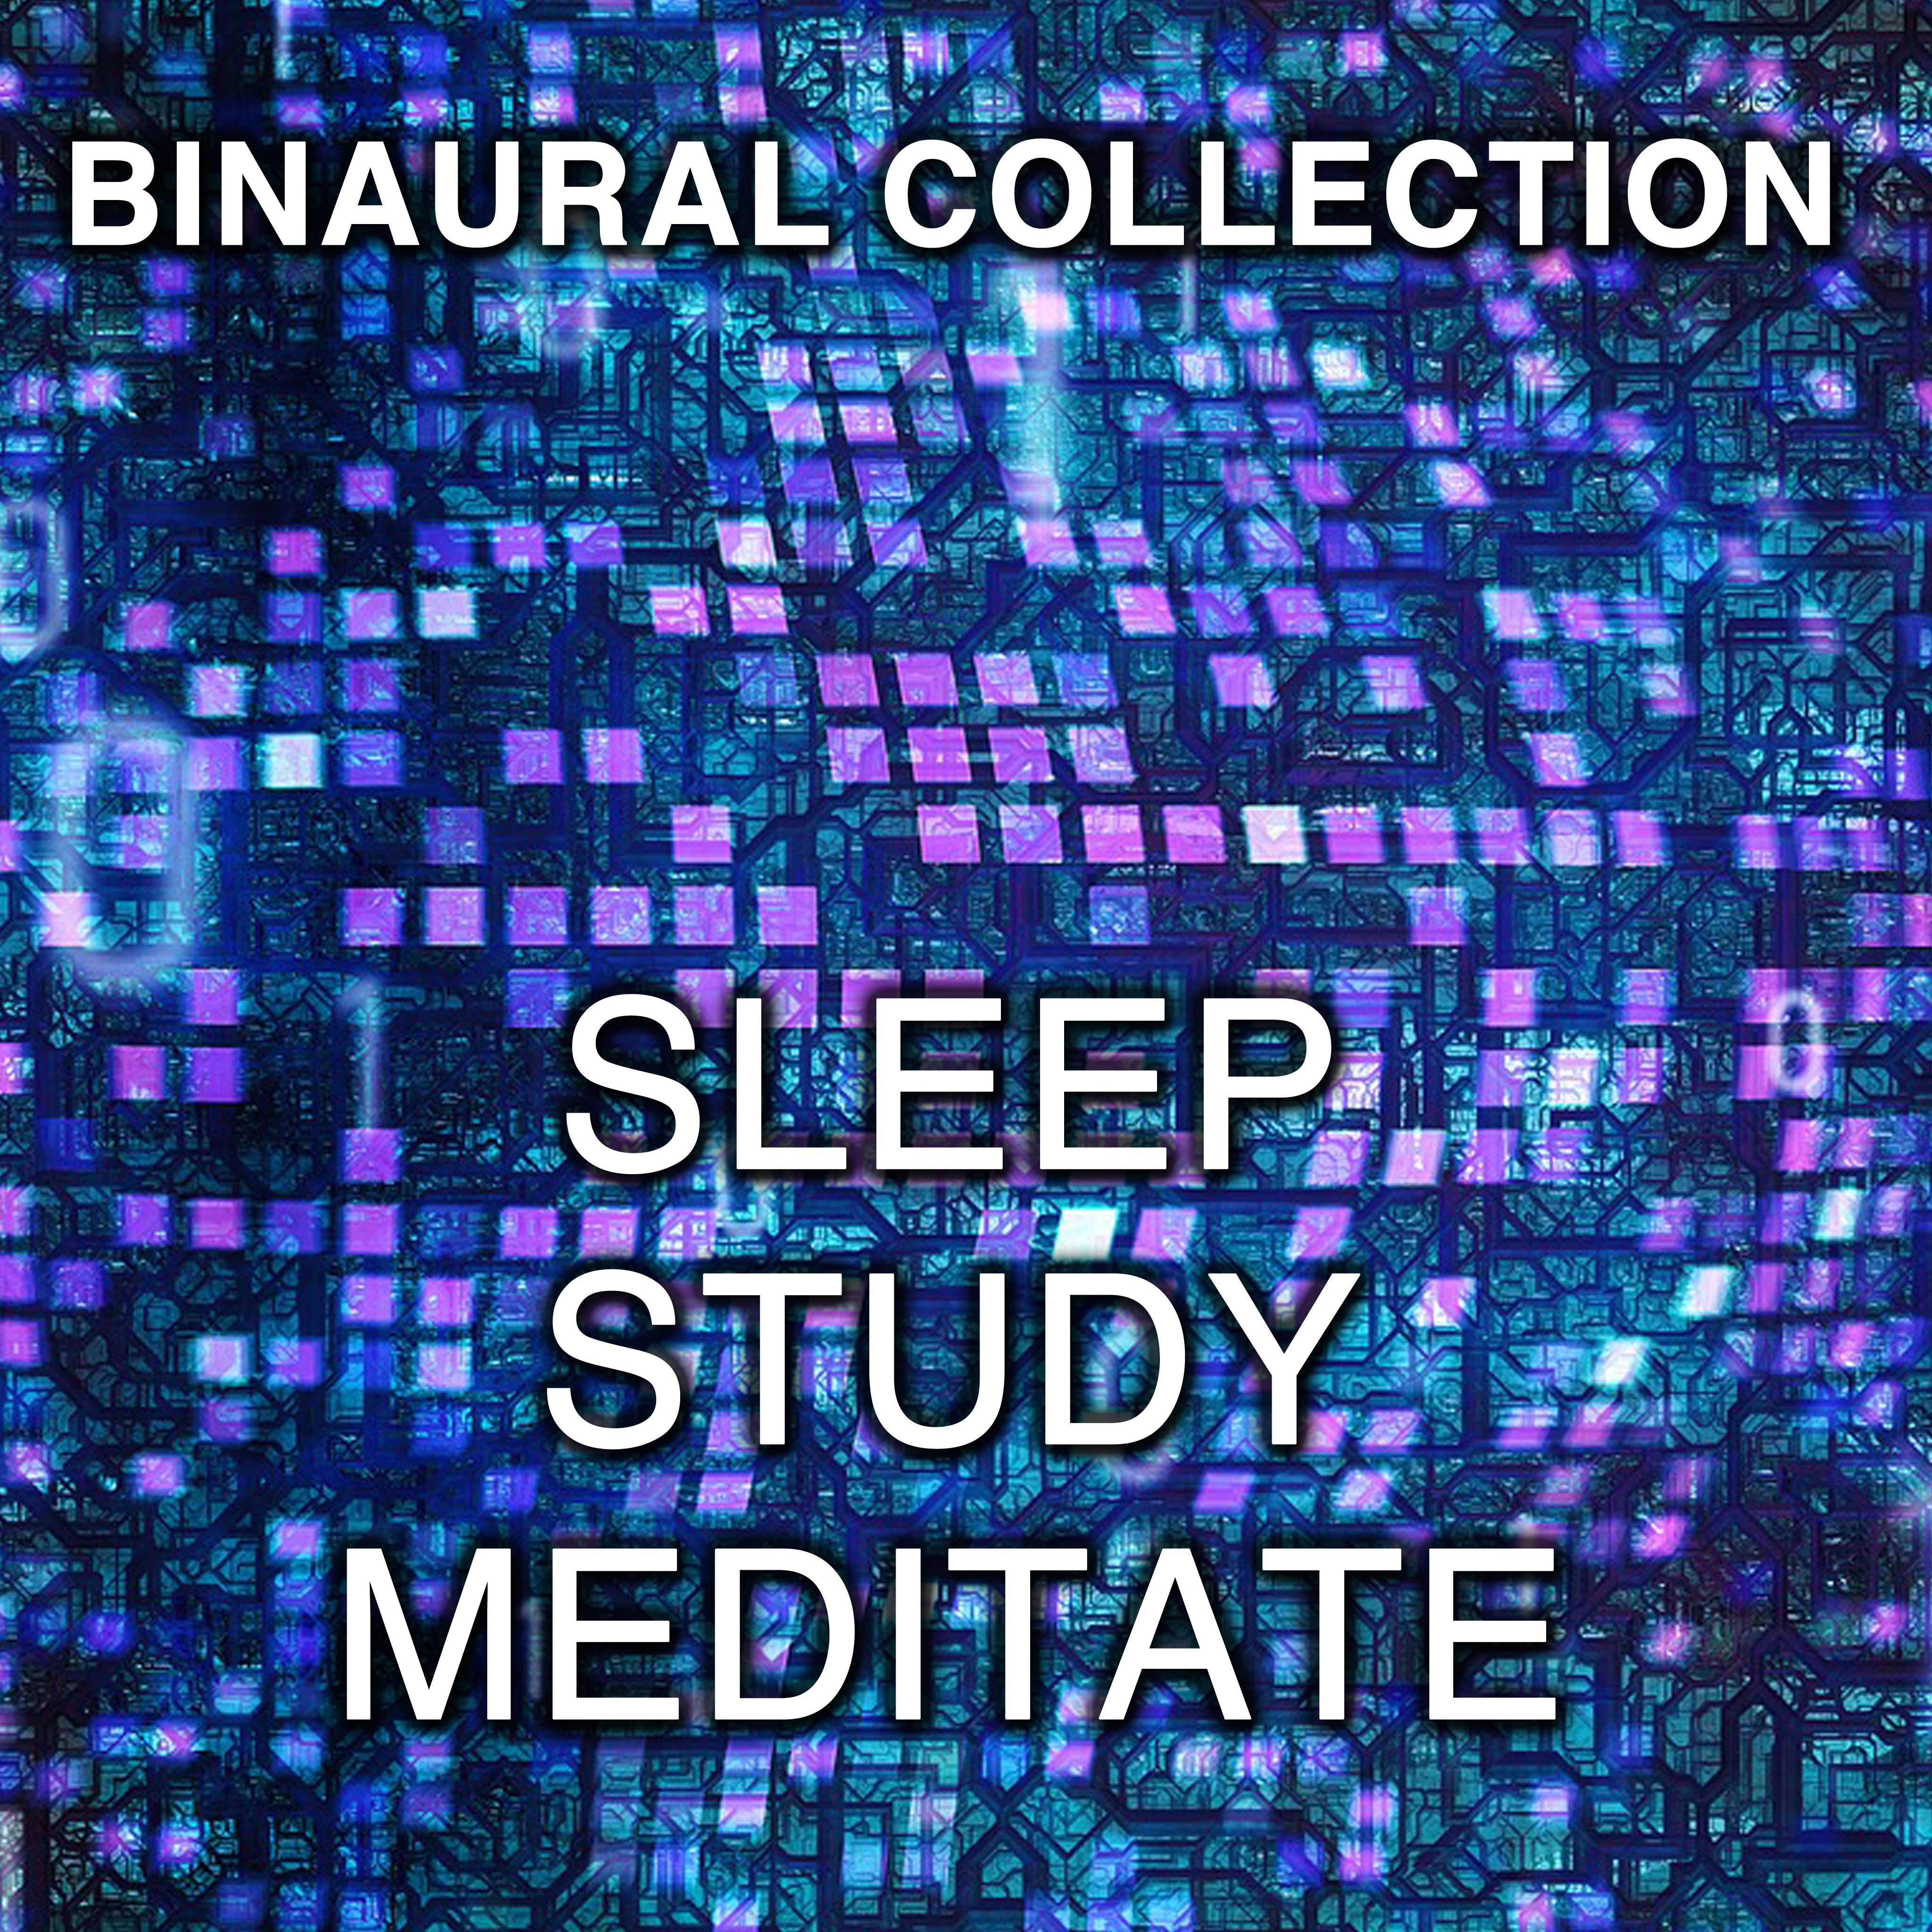 2018 A Binaural Collection: Sleep Well Study Well Meditate Well